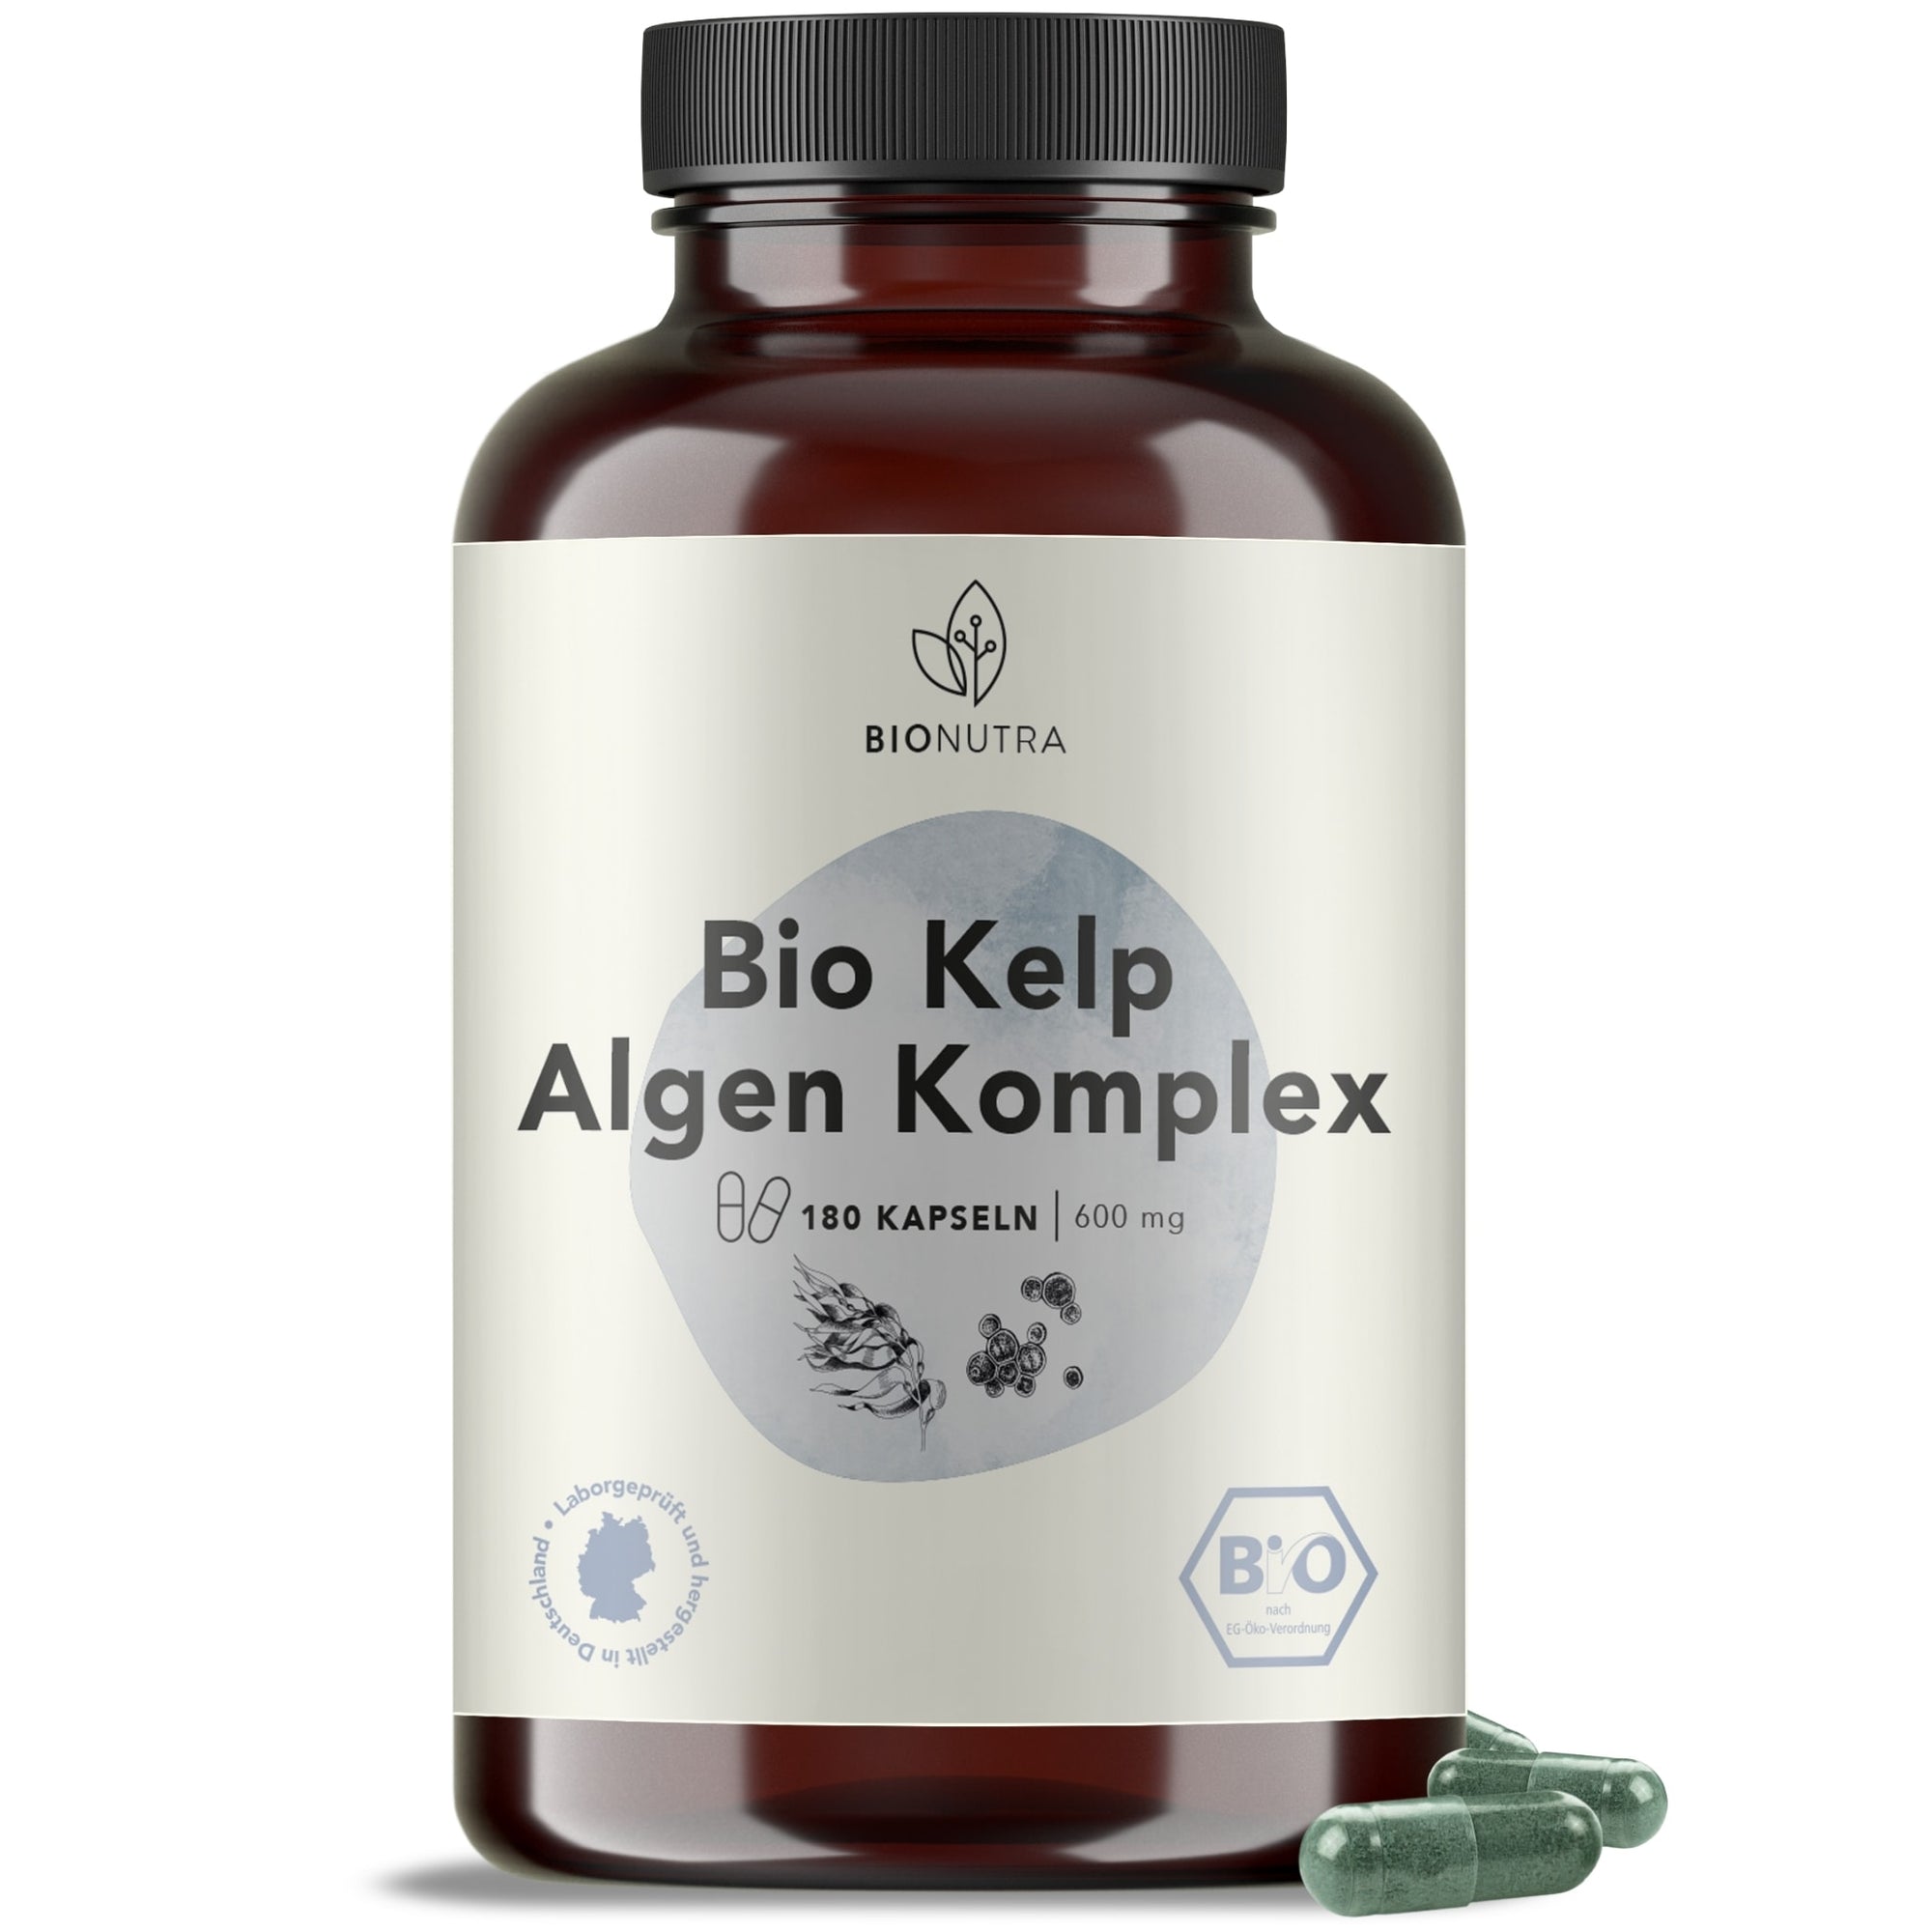 Bio Kelp Algen Komplex Kapseln 600mg, 150 ug Jod